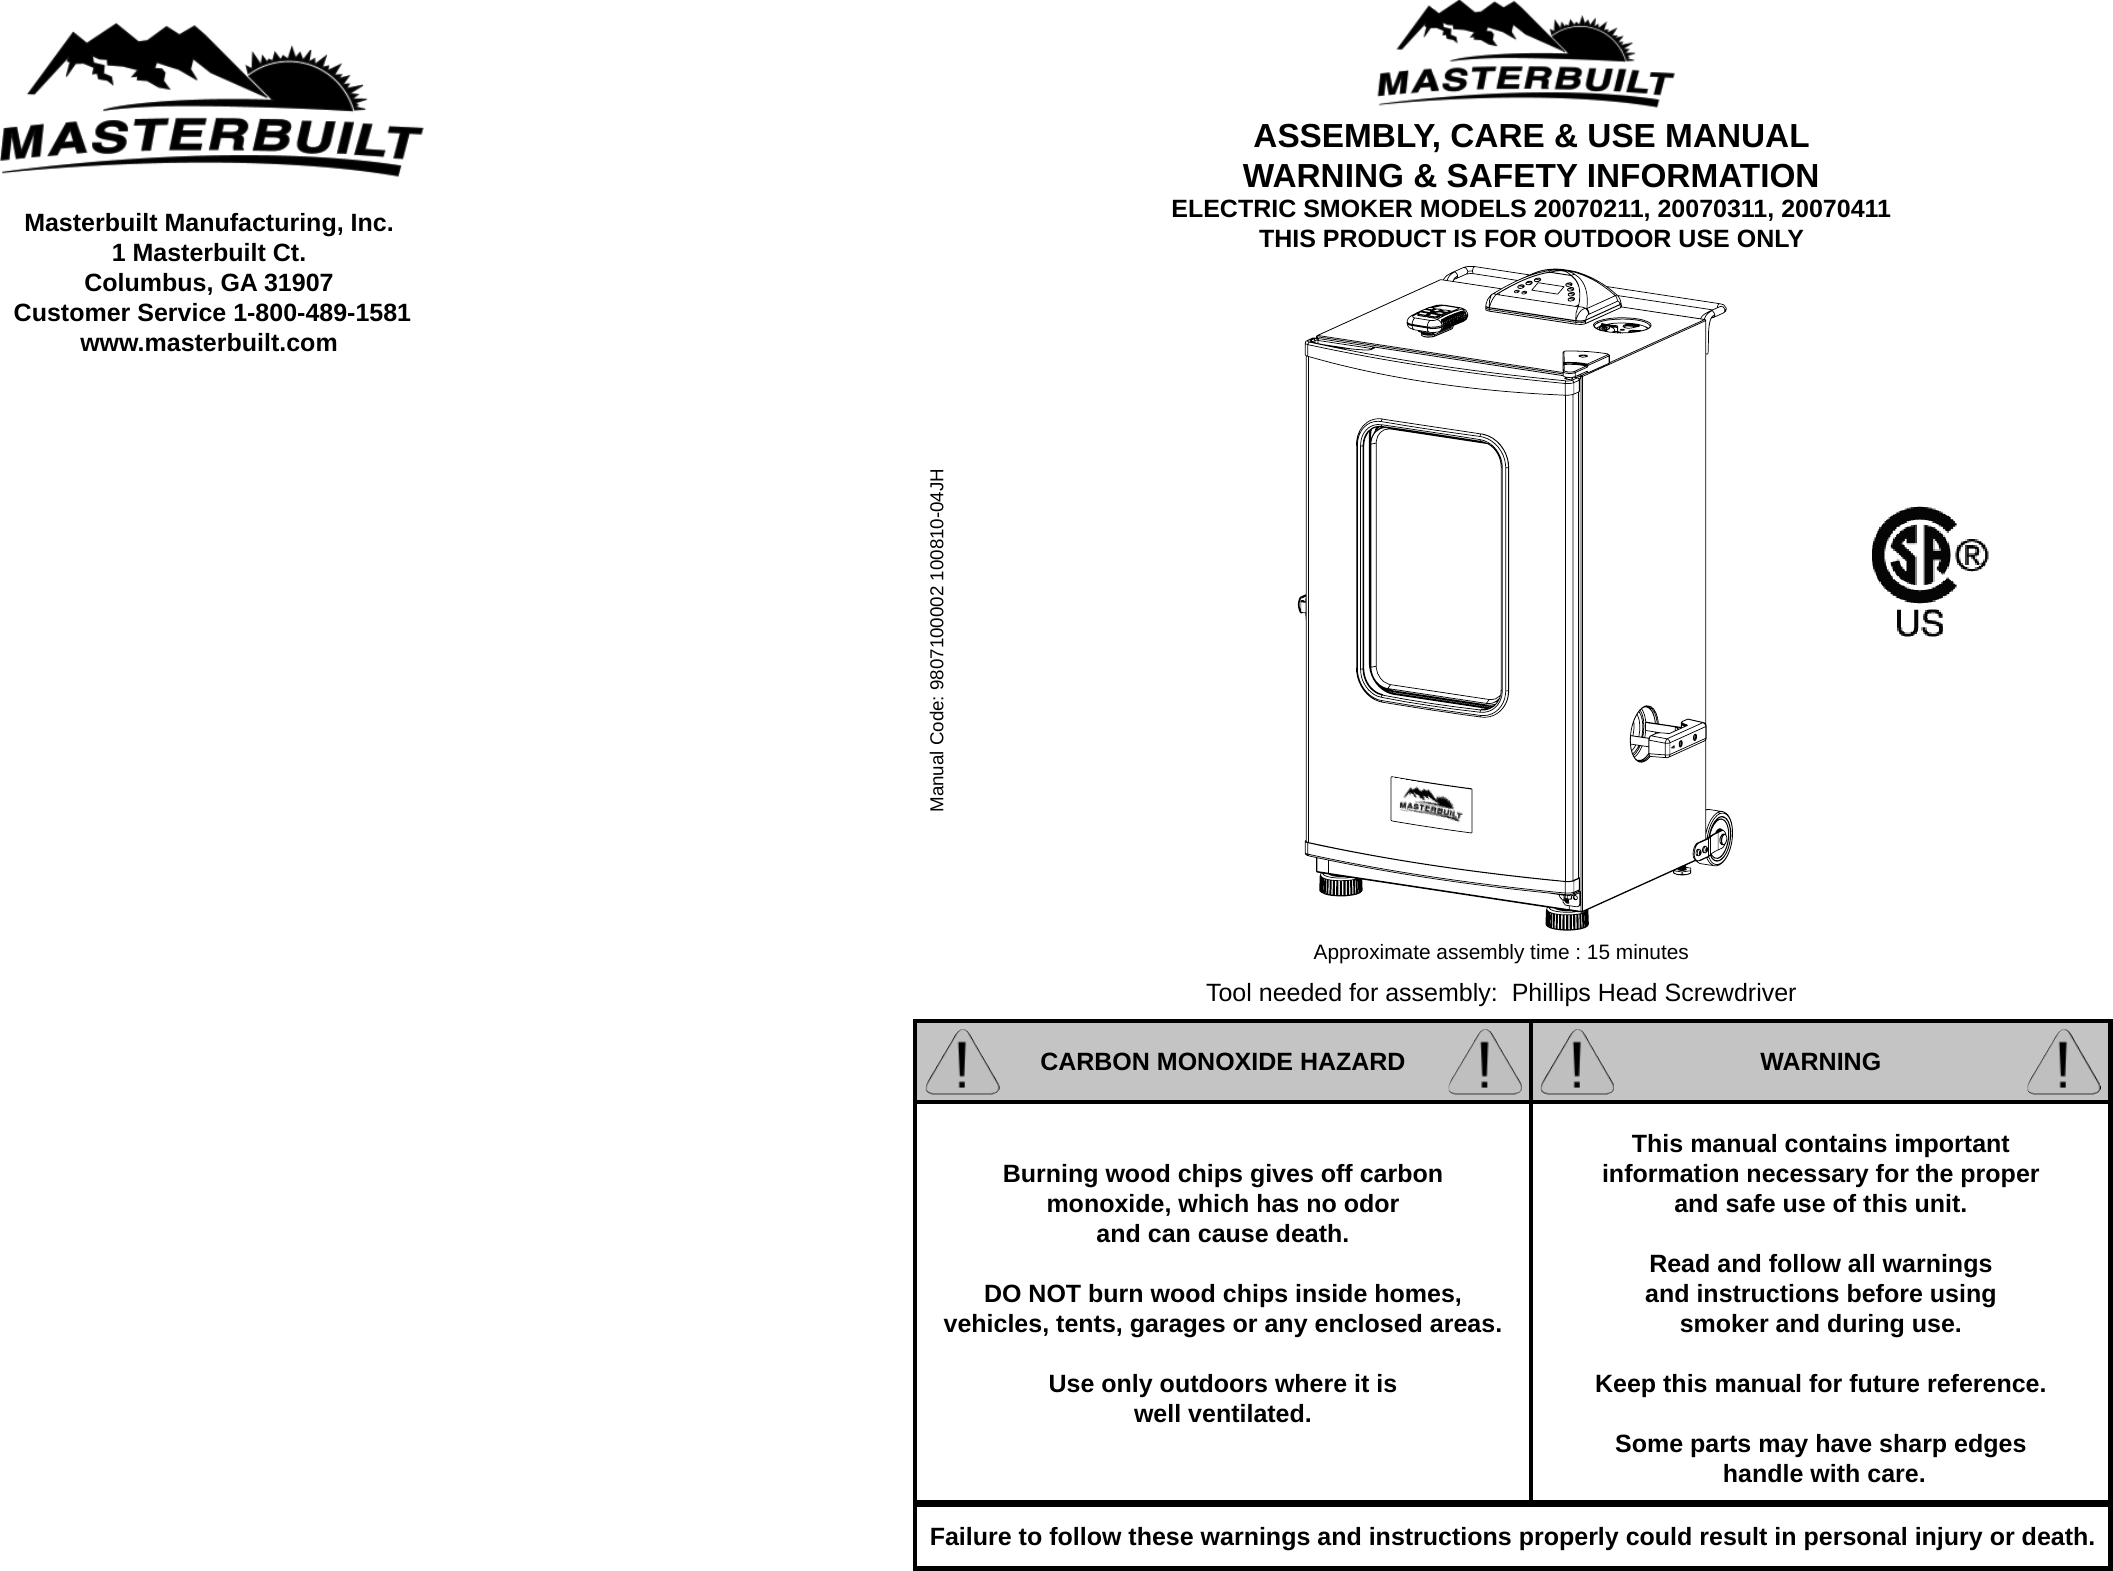 Masterbuilt Electric Smoker User Manual